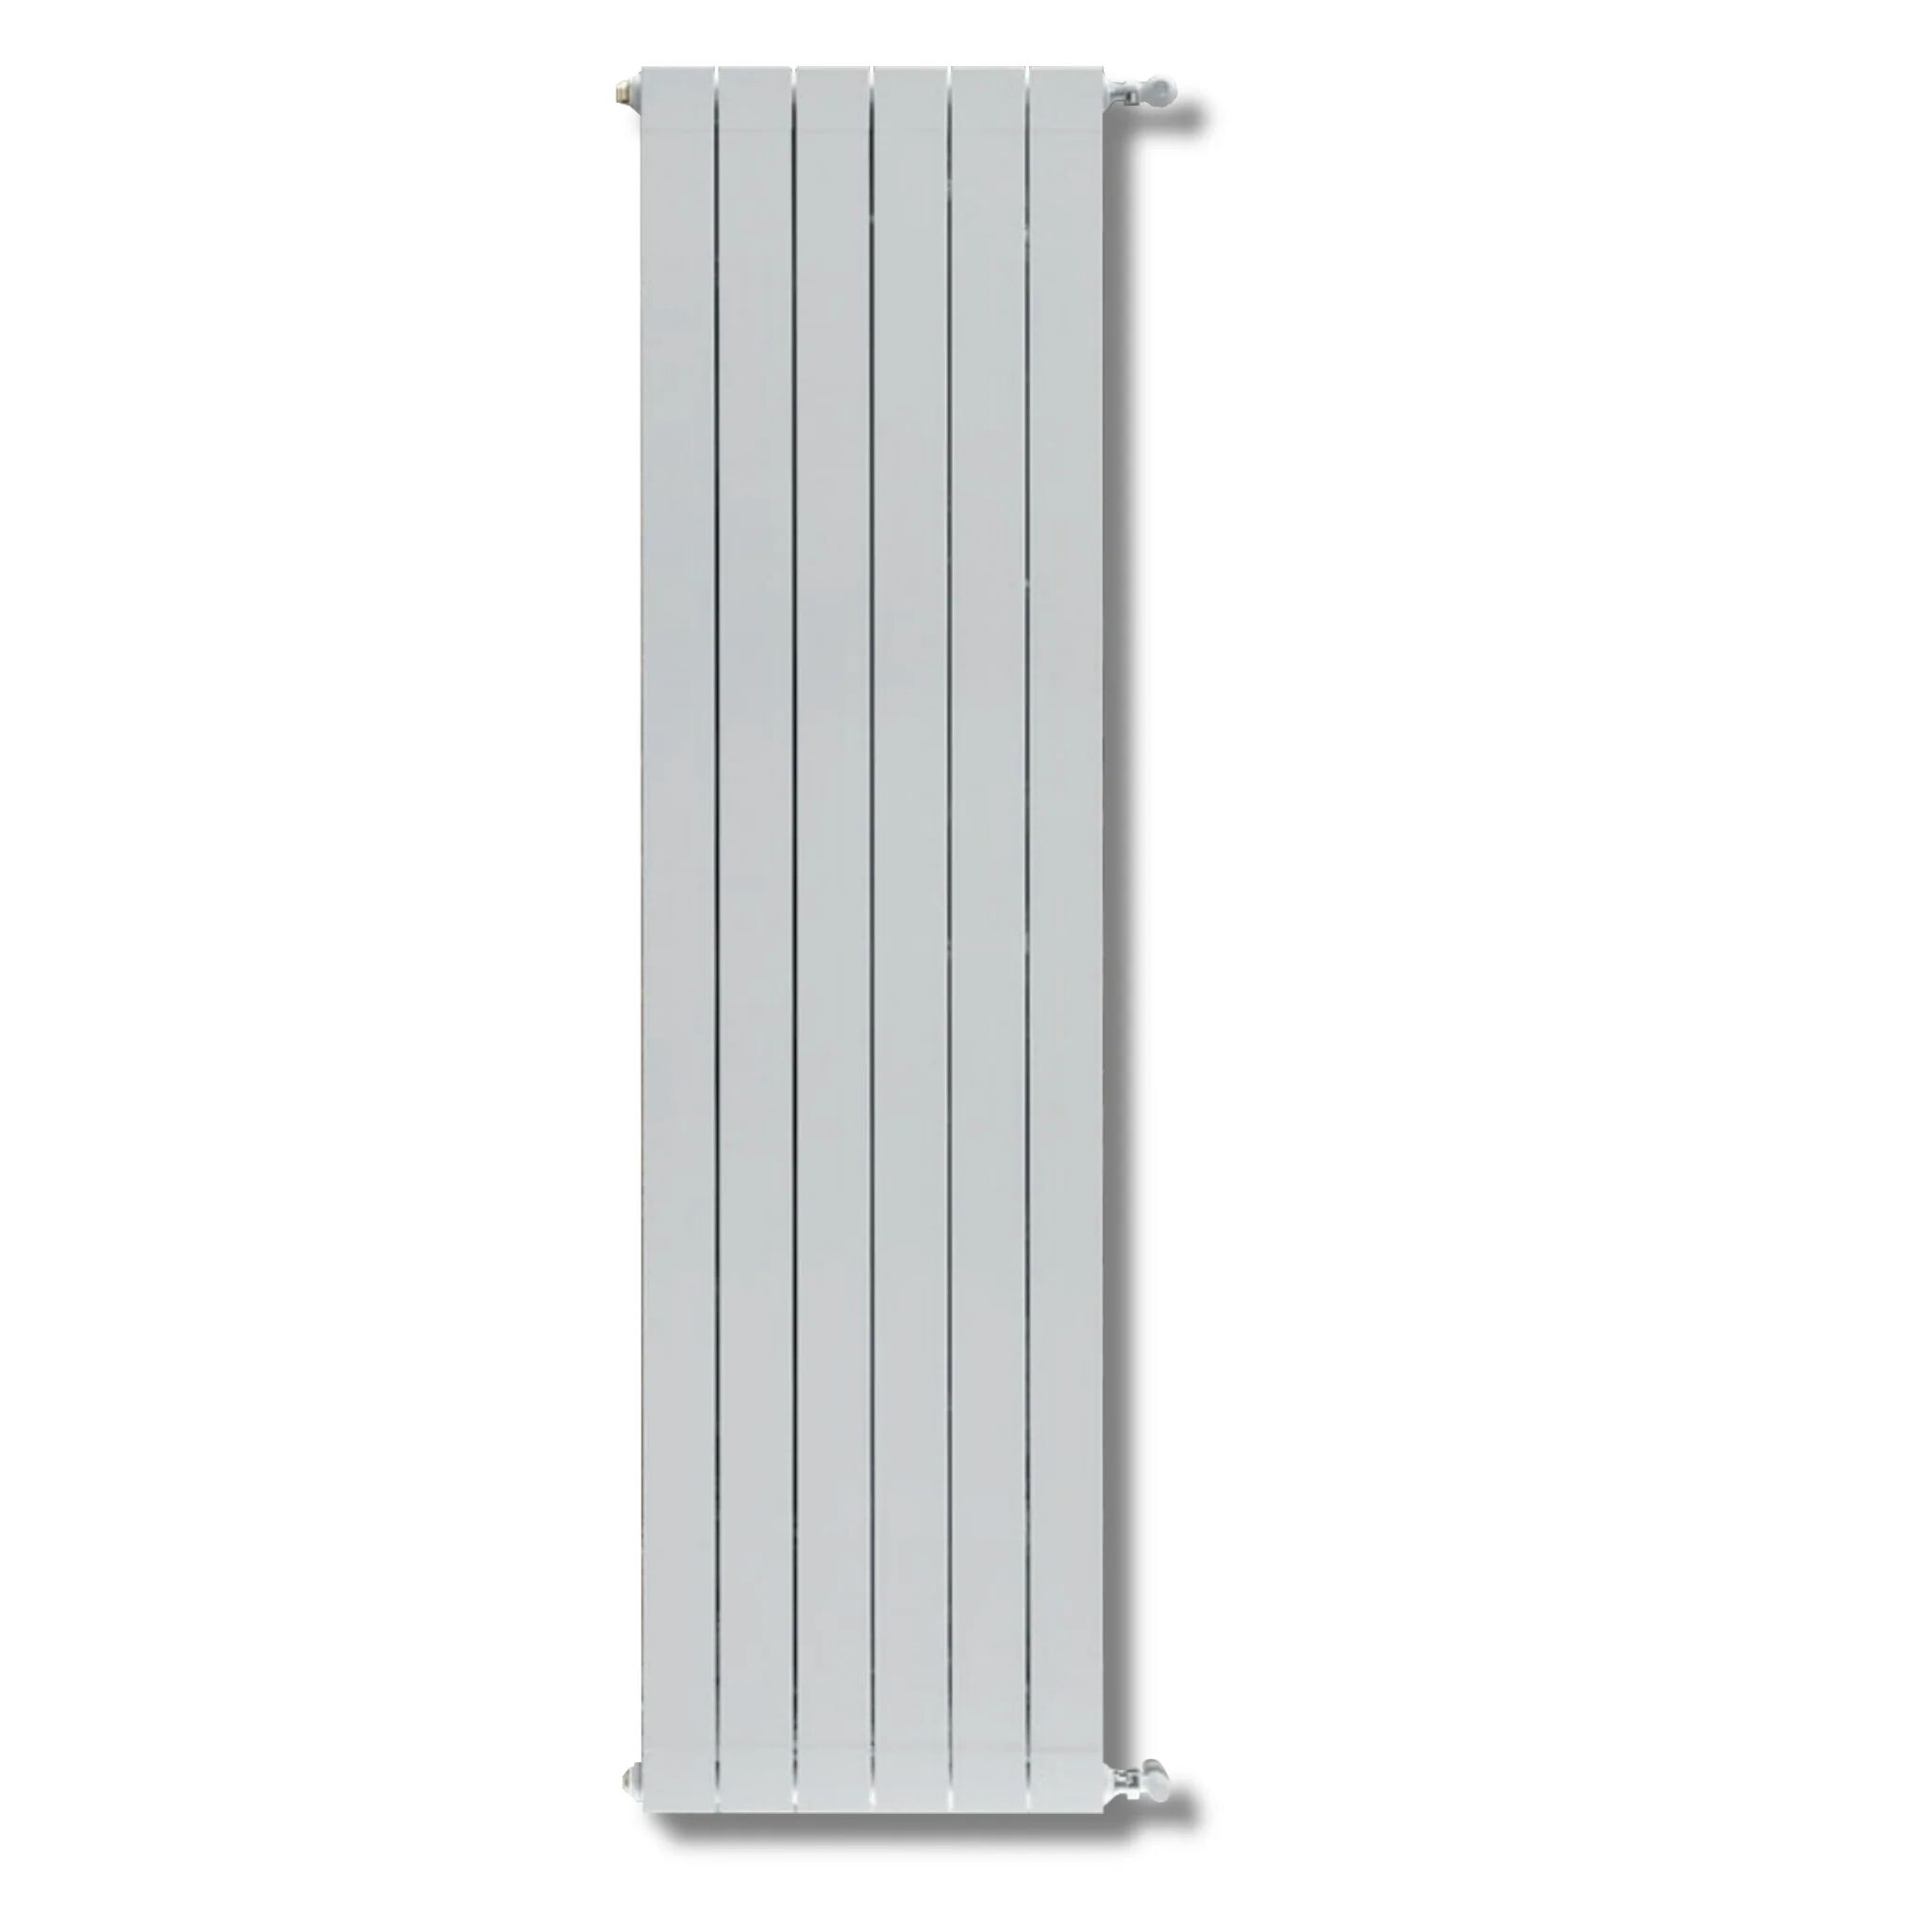 Global Termosifone radiatore alluminio bianco da 2 a 6 elementi OSCAR 1600 - 4 elementi